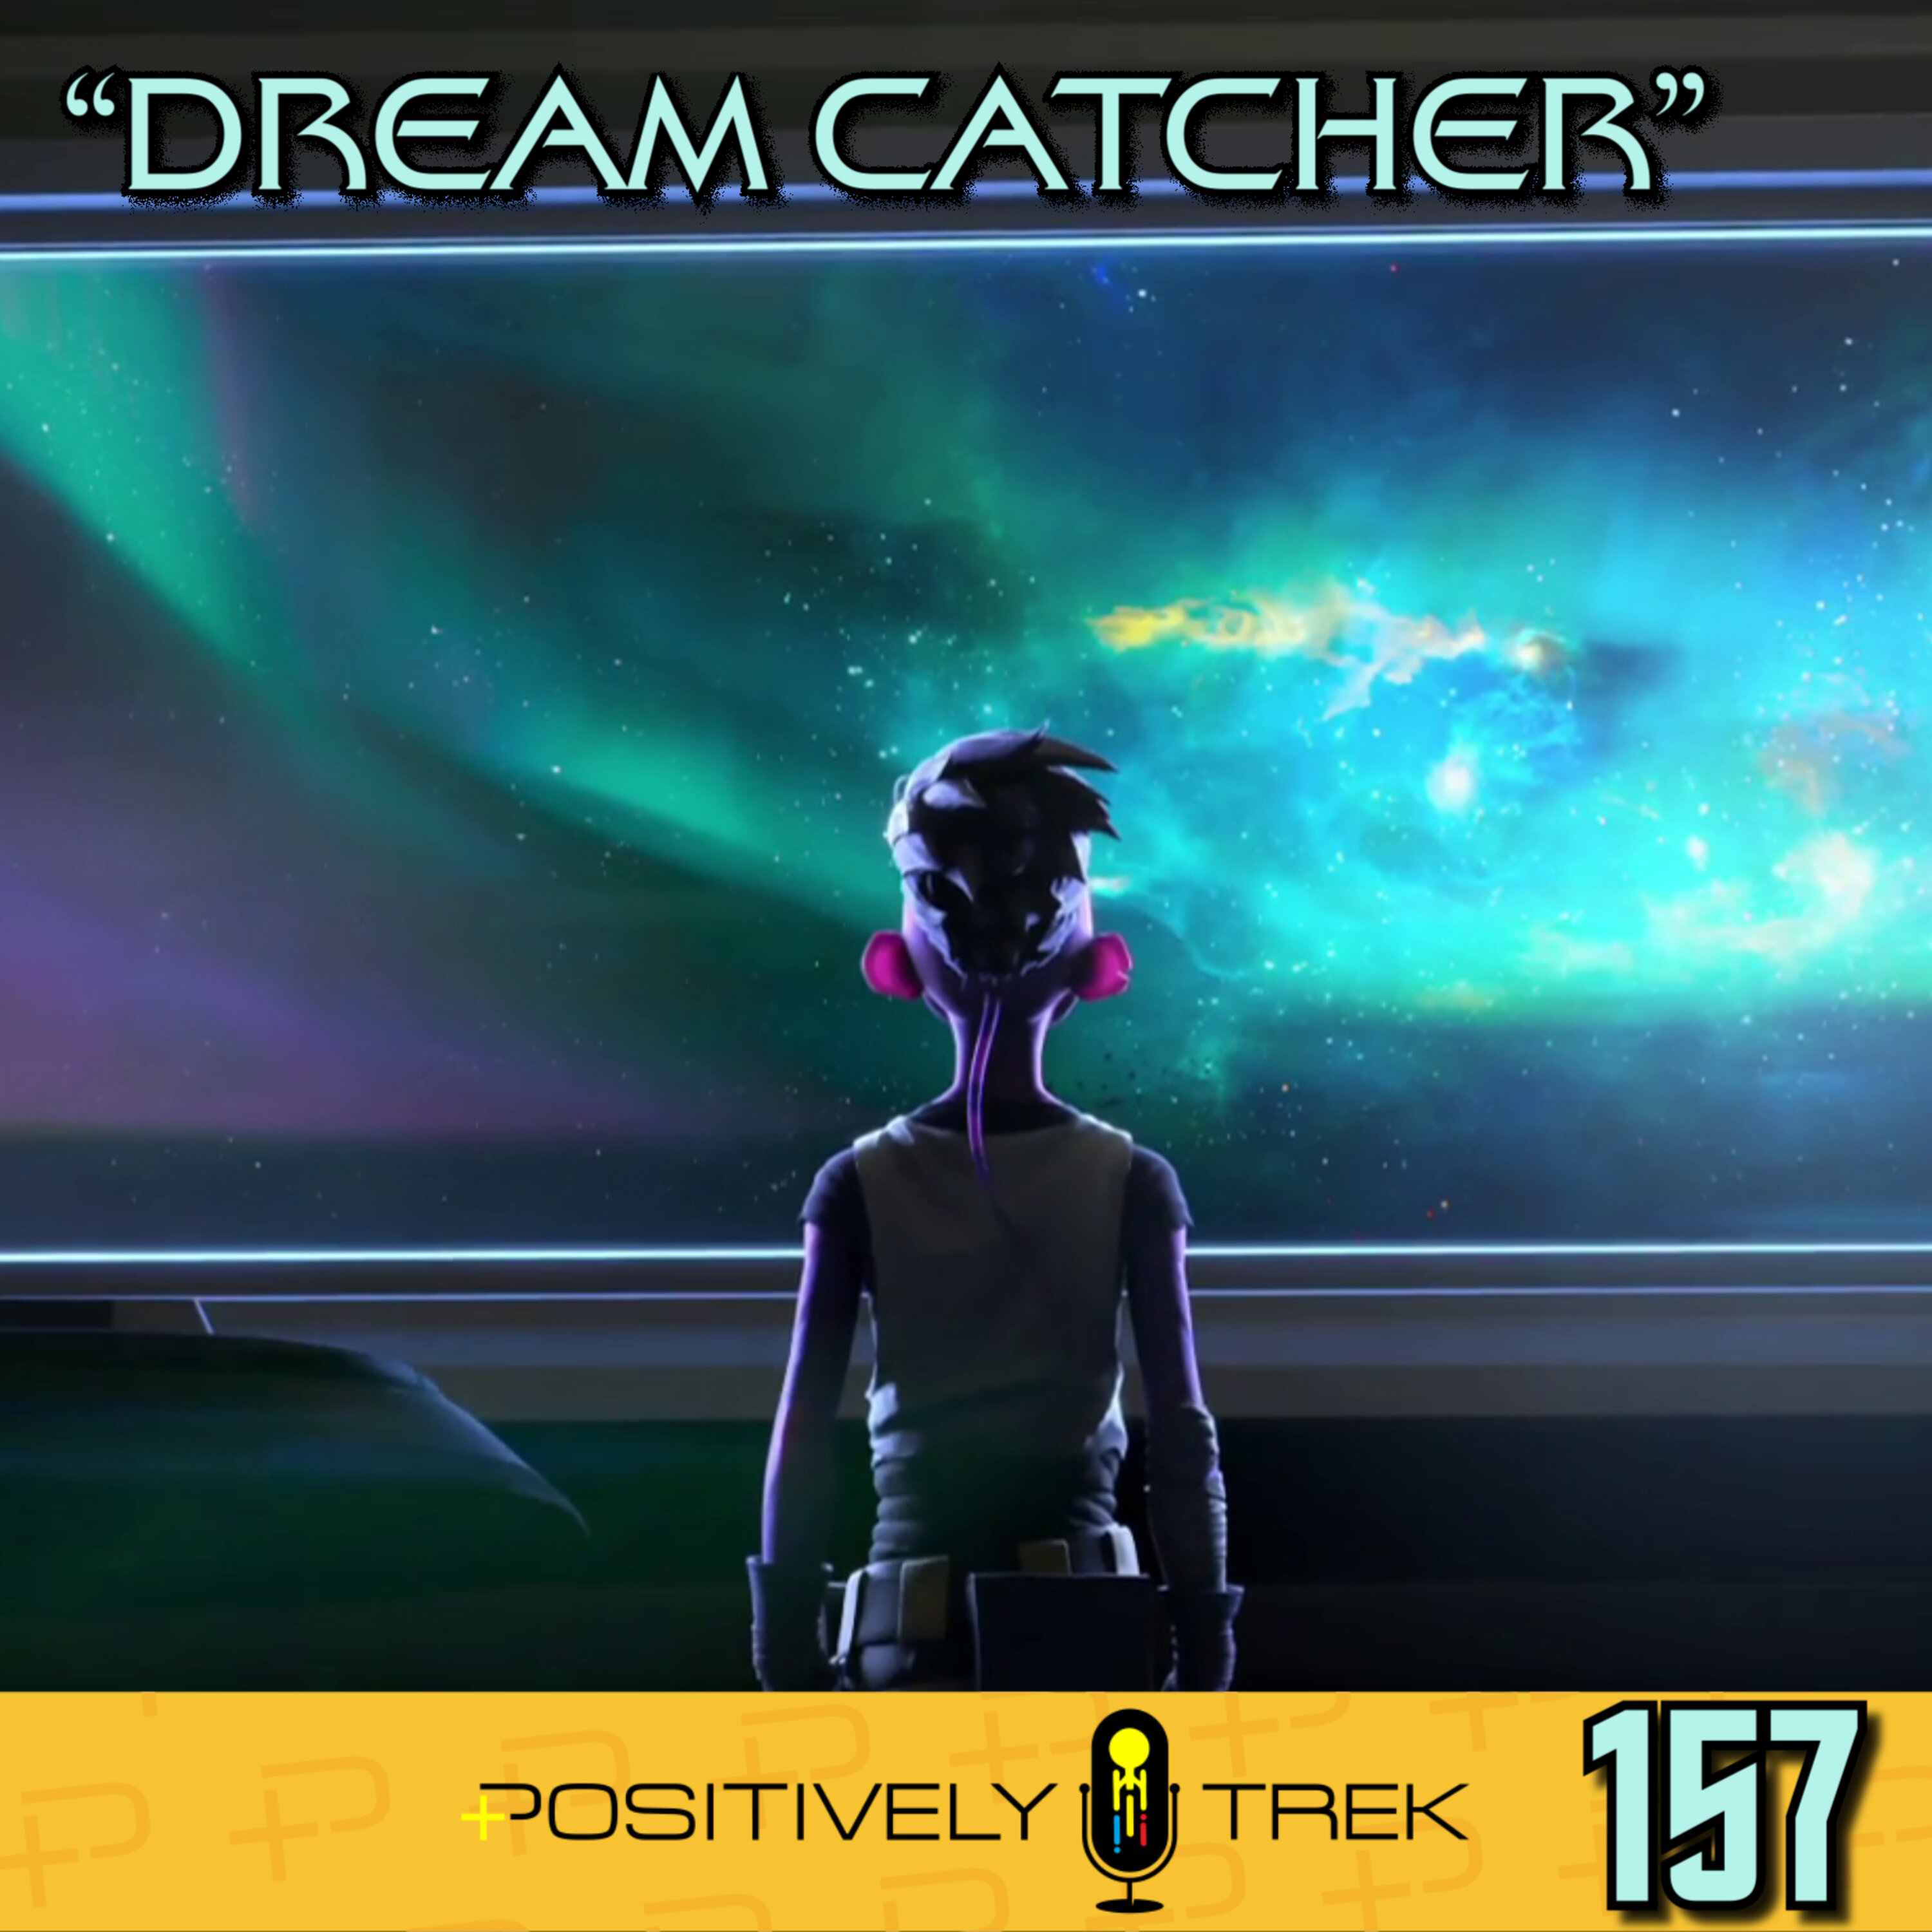 Prodigy Review: “Dream Catcher” (1.04)